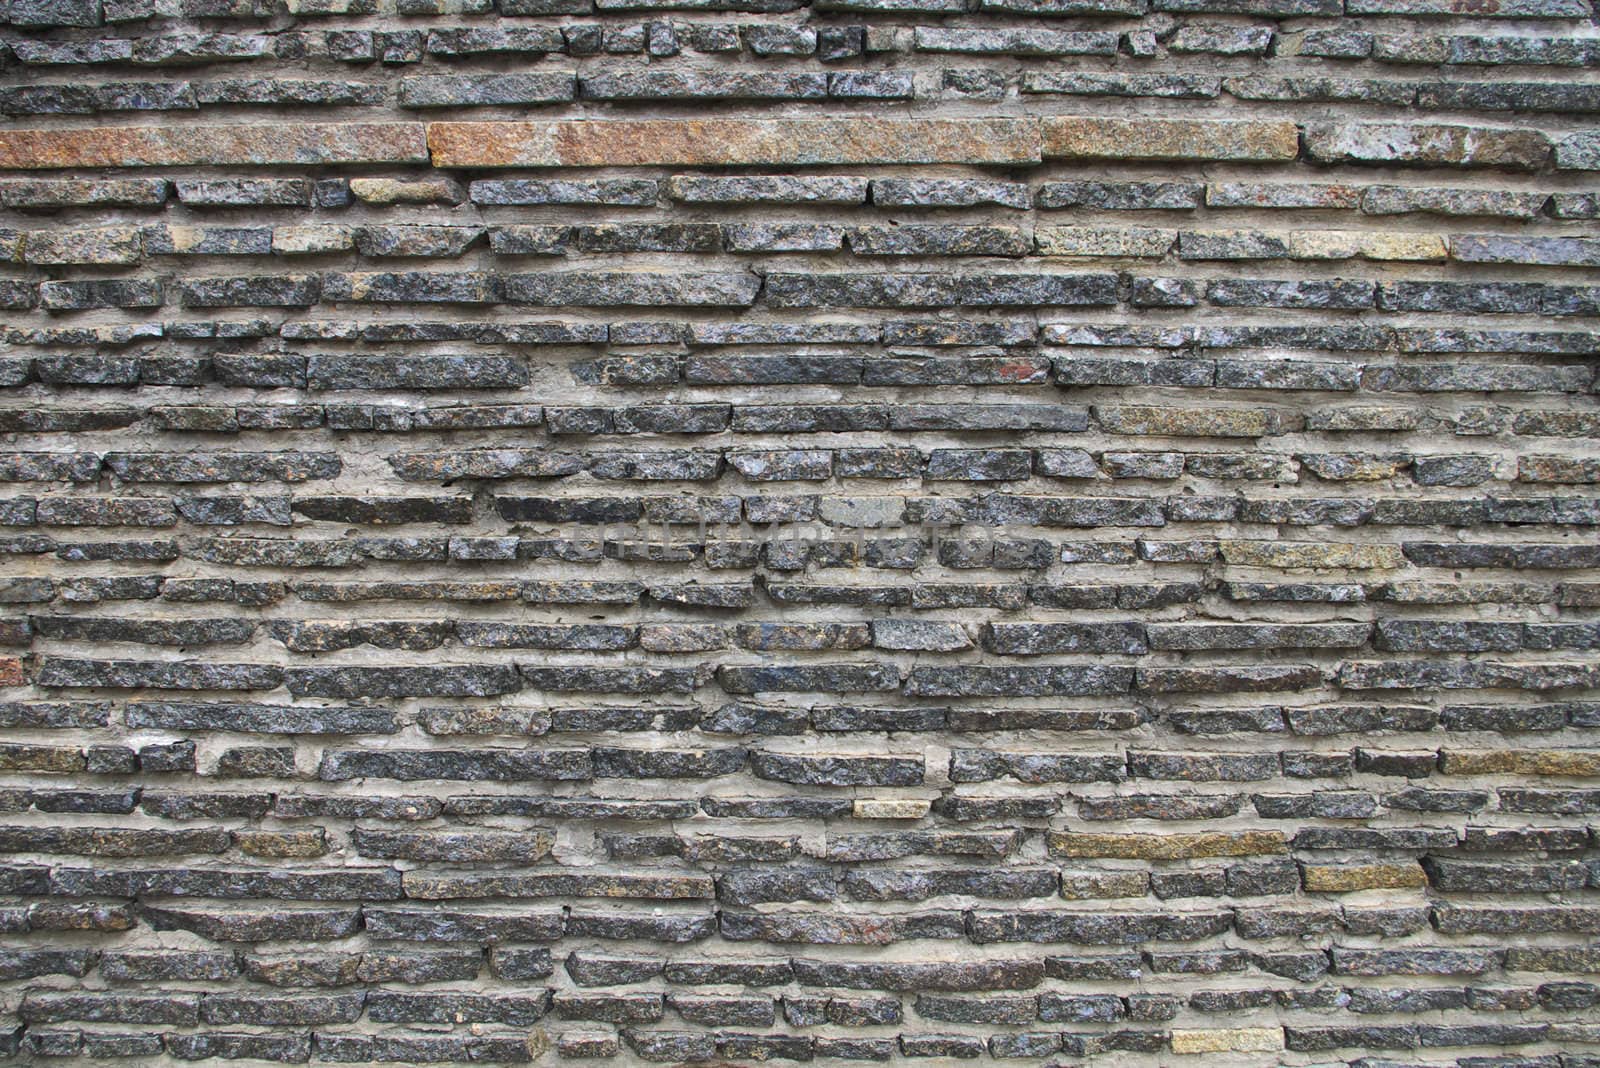 An aged brick wall